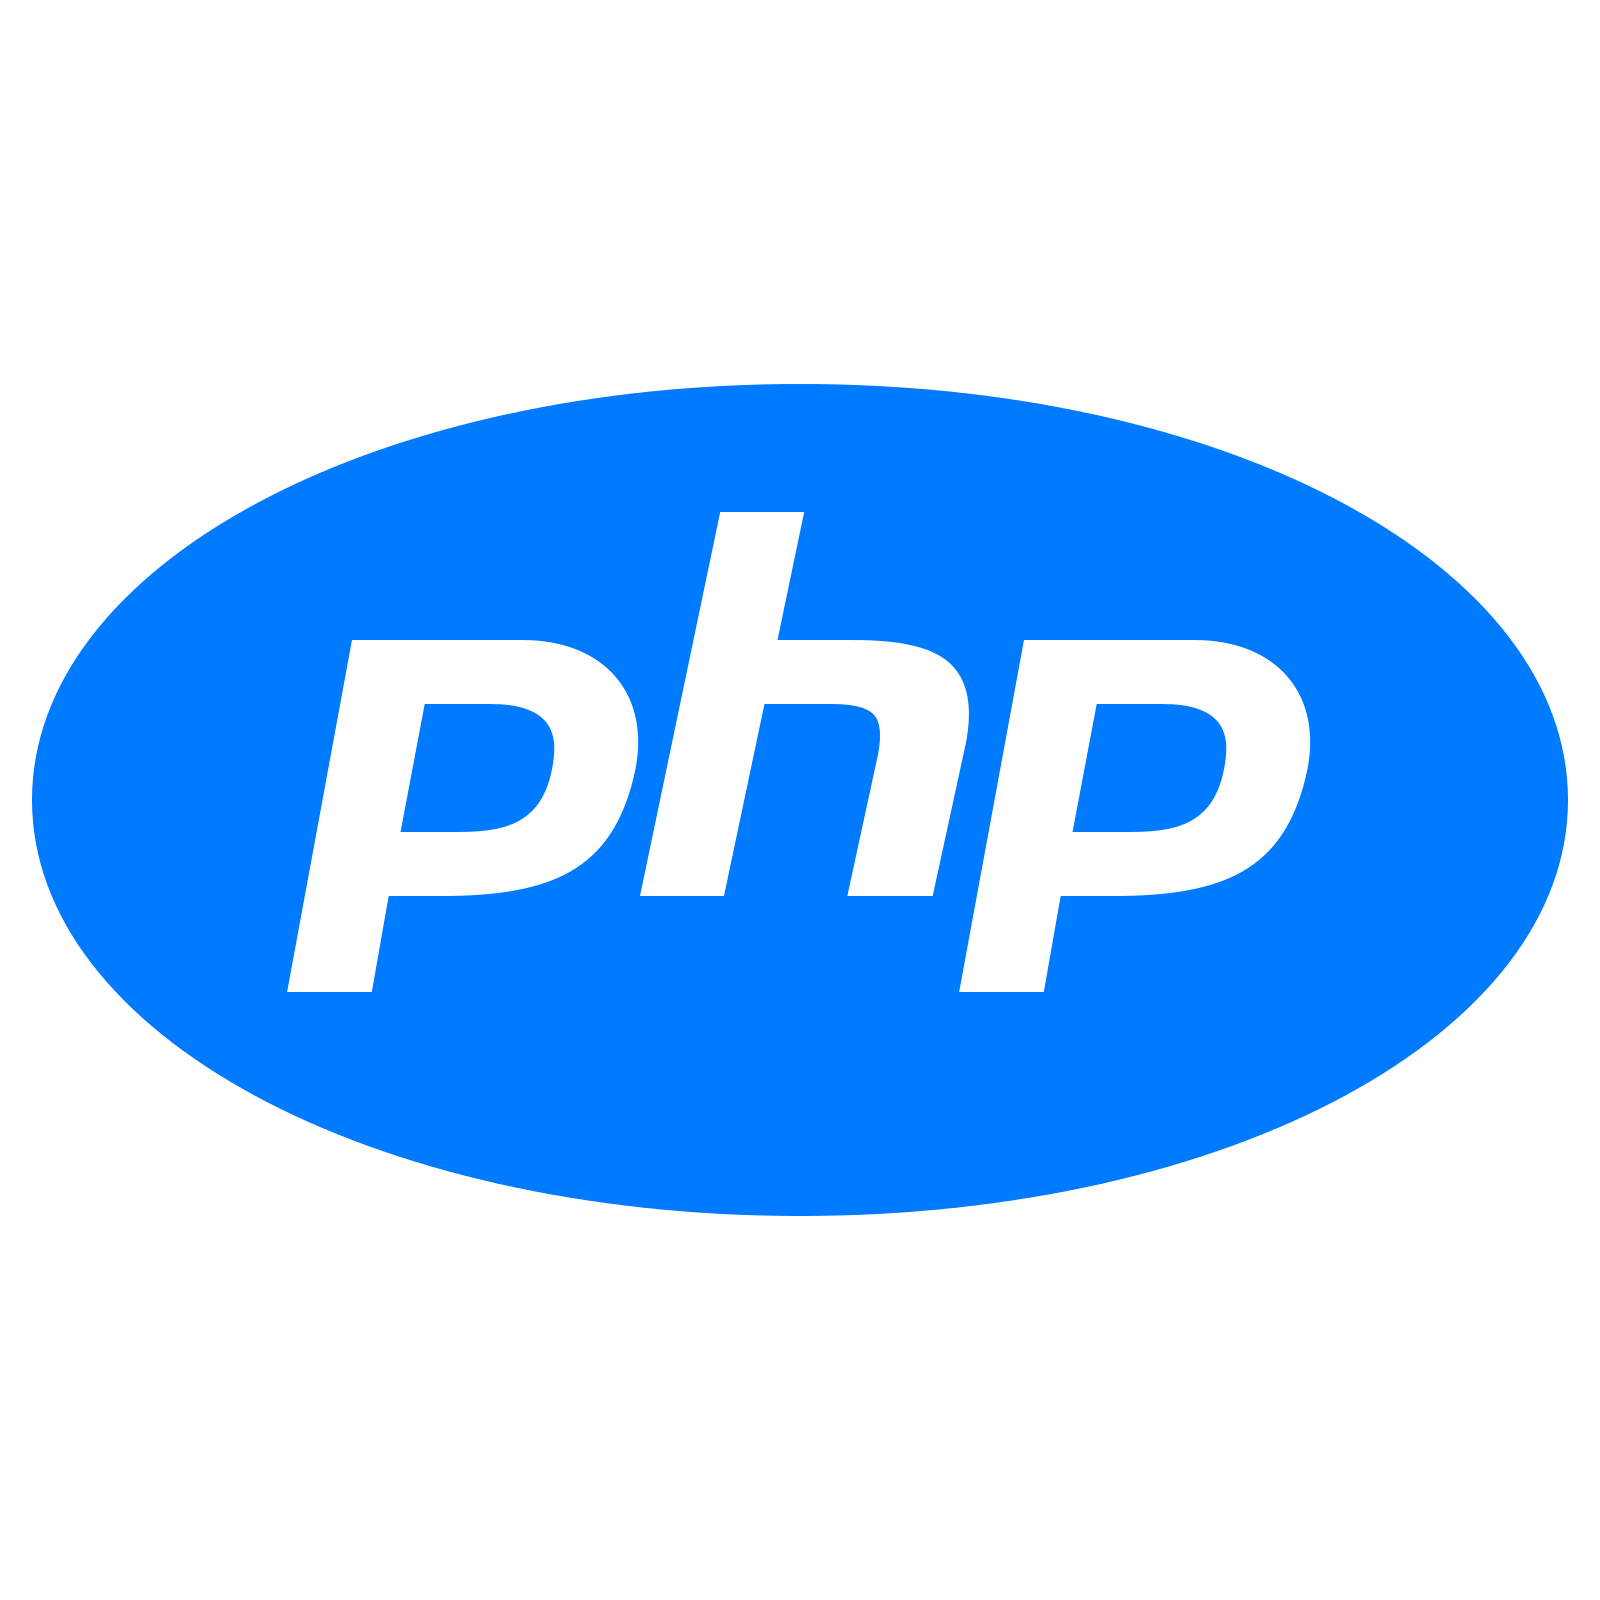 PHP Logo Transparent Image